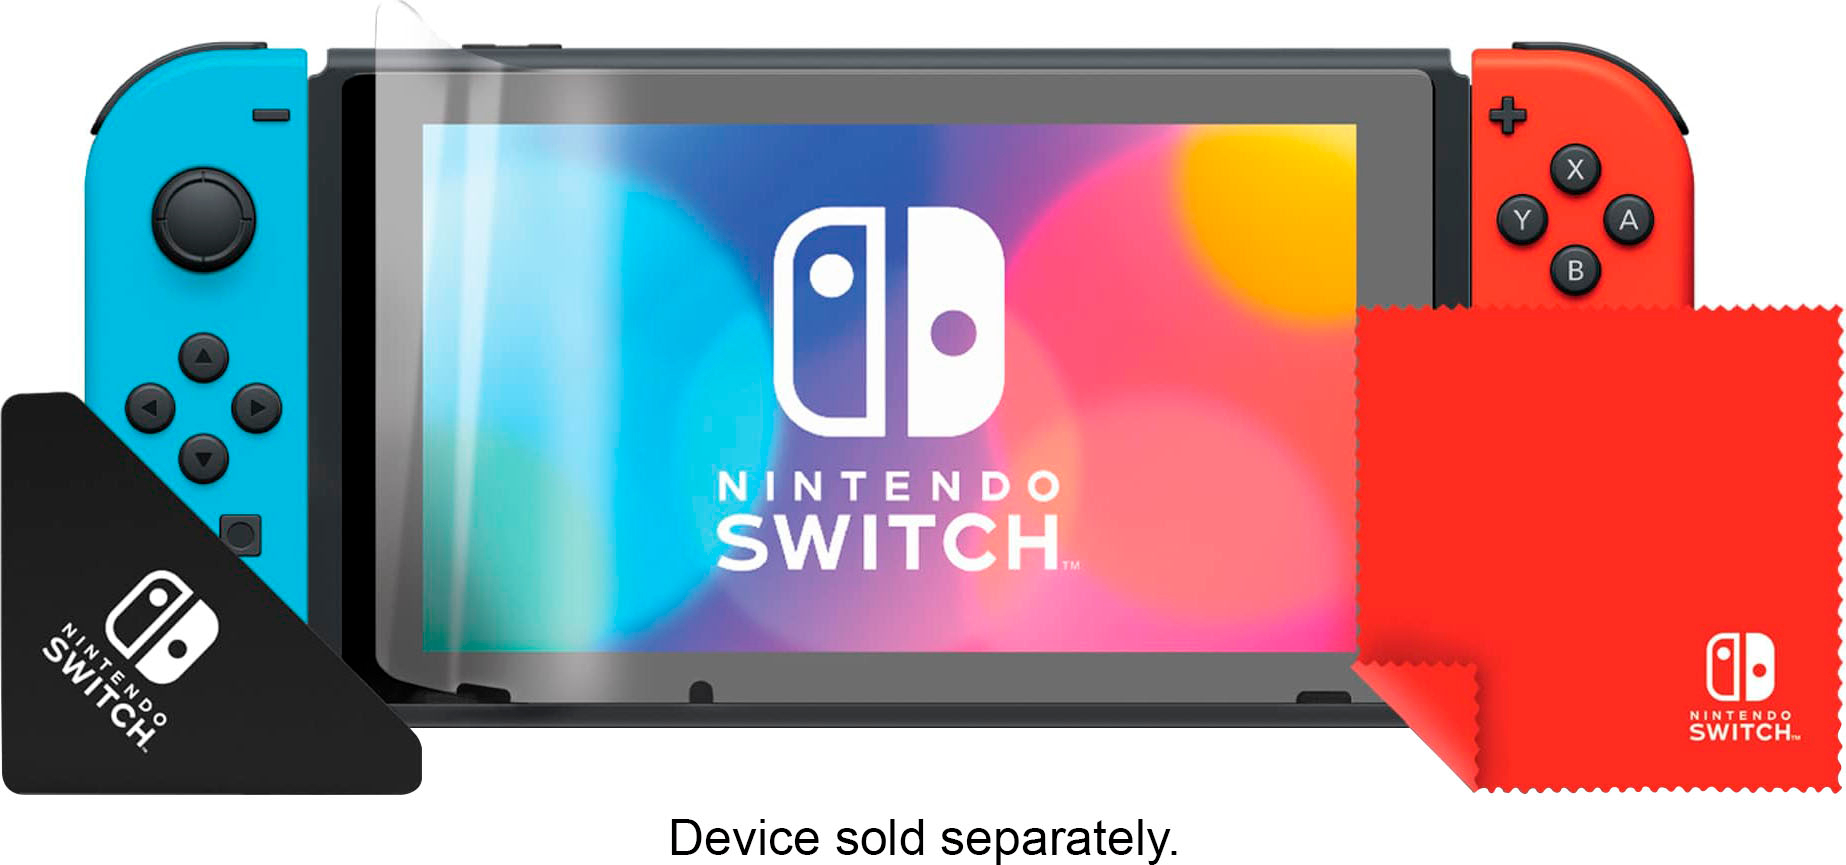 Get ready for Nintendo Switch Online, My Nintendo通知